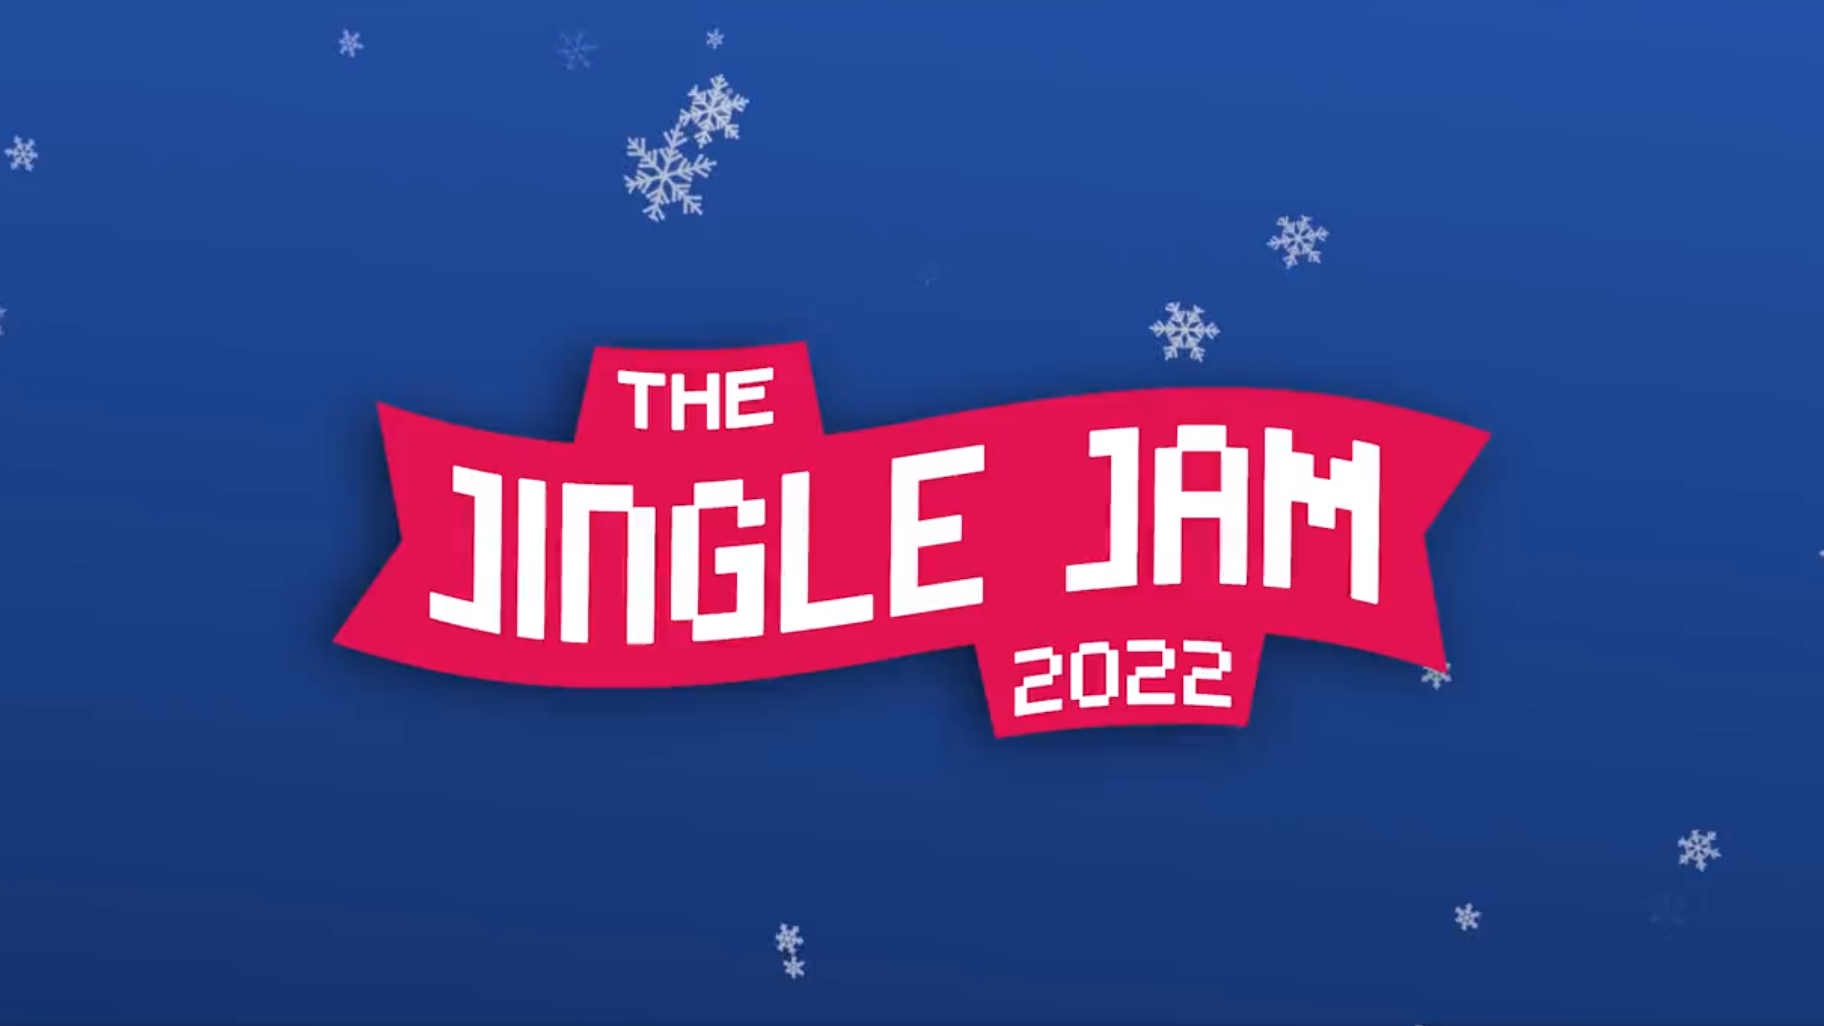 Yogscast Jingle Jam charity stream reaches impressive donation